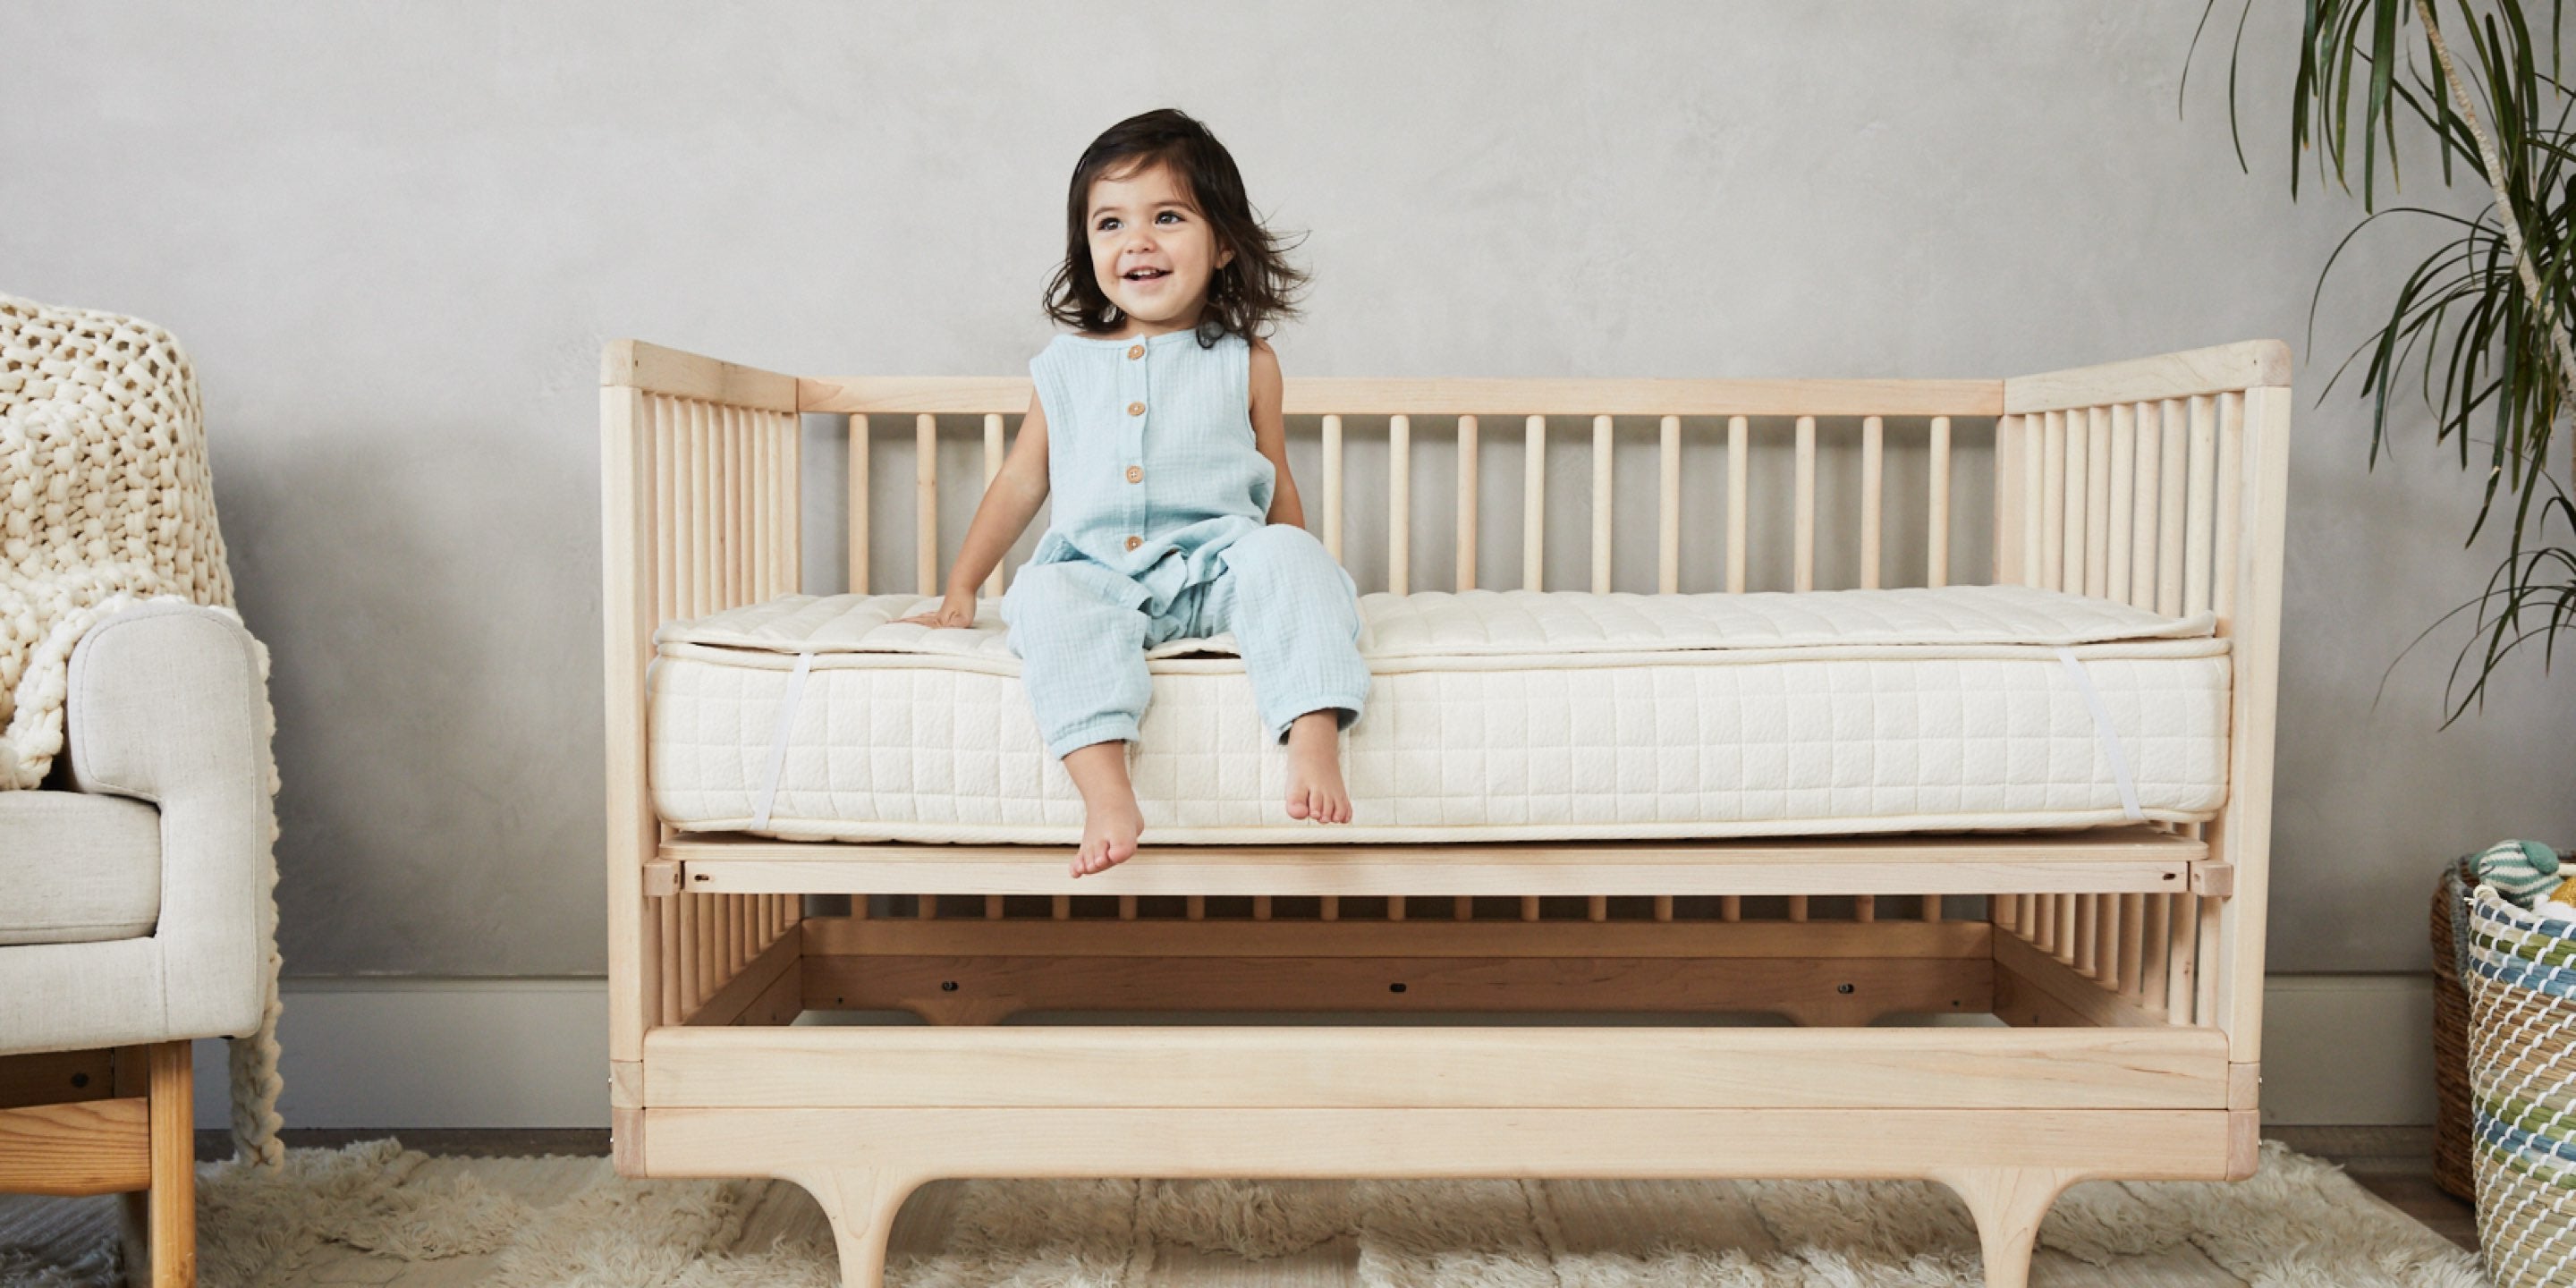 Buy wholesale My Baby Mattress Baby mattress Finn OEKO TEX certified,  children's mattress with step edge, breathable - 60x120 cm